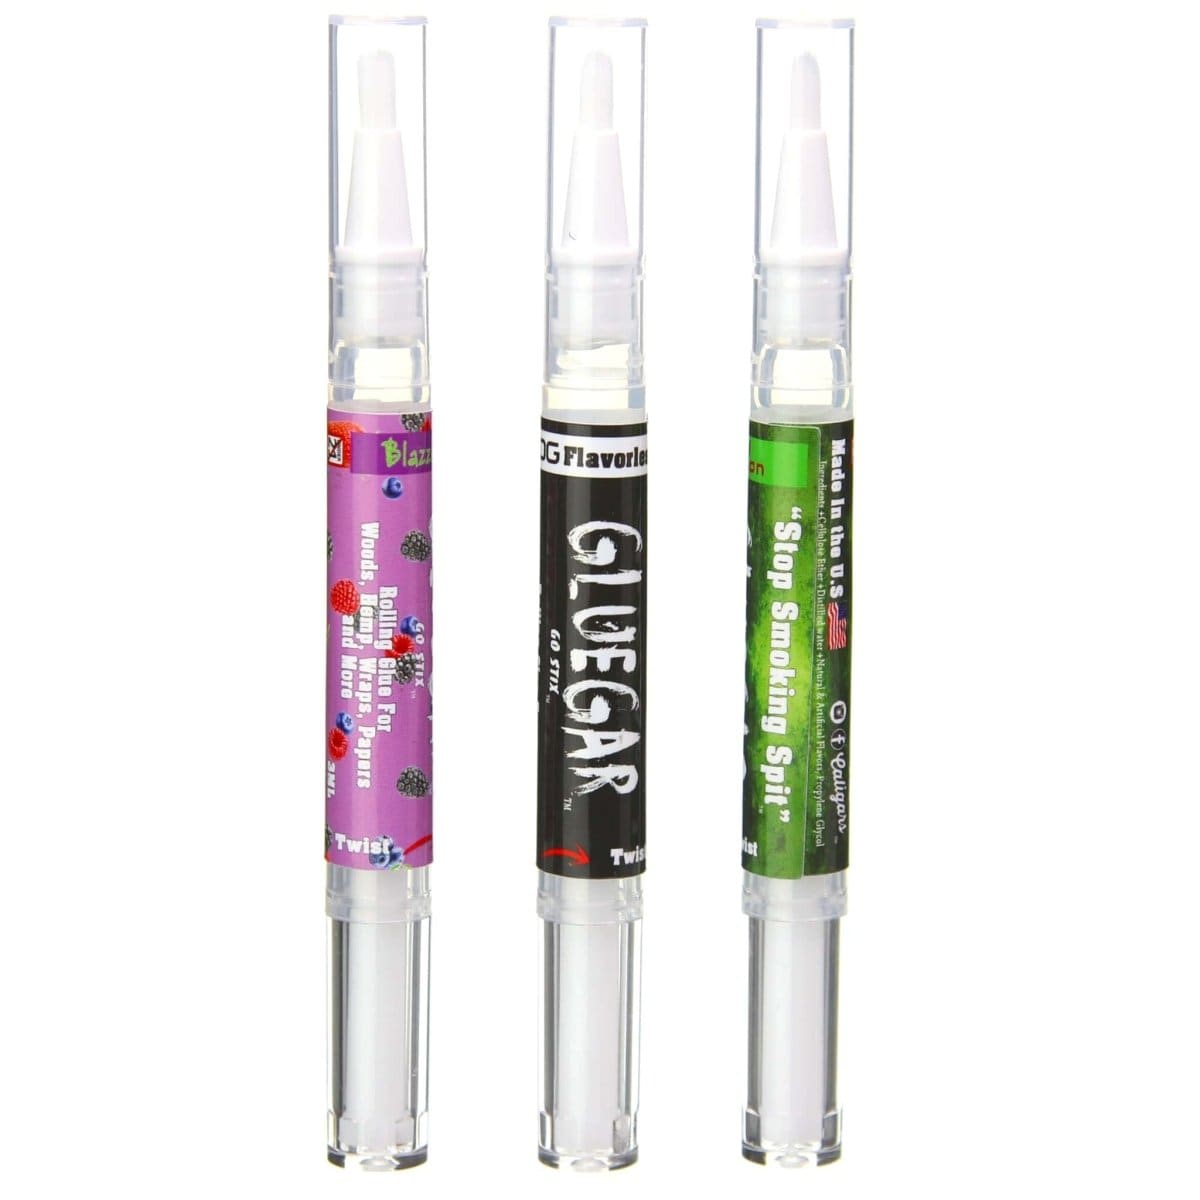 Gluegar Og Flavorless Rolling Glue - 1/2 Gallon – The Supply Joint